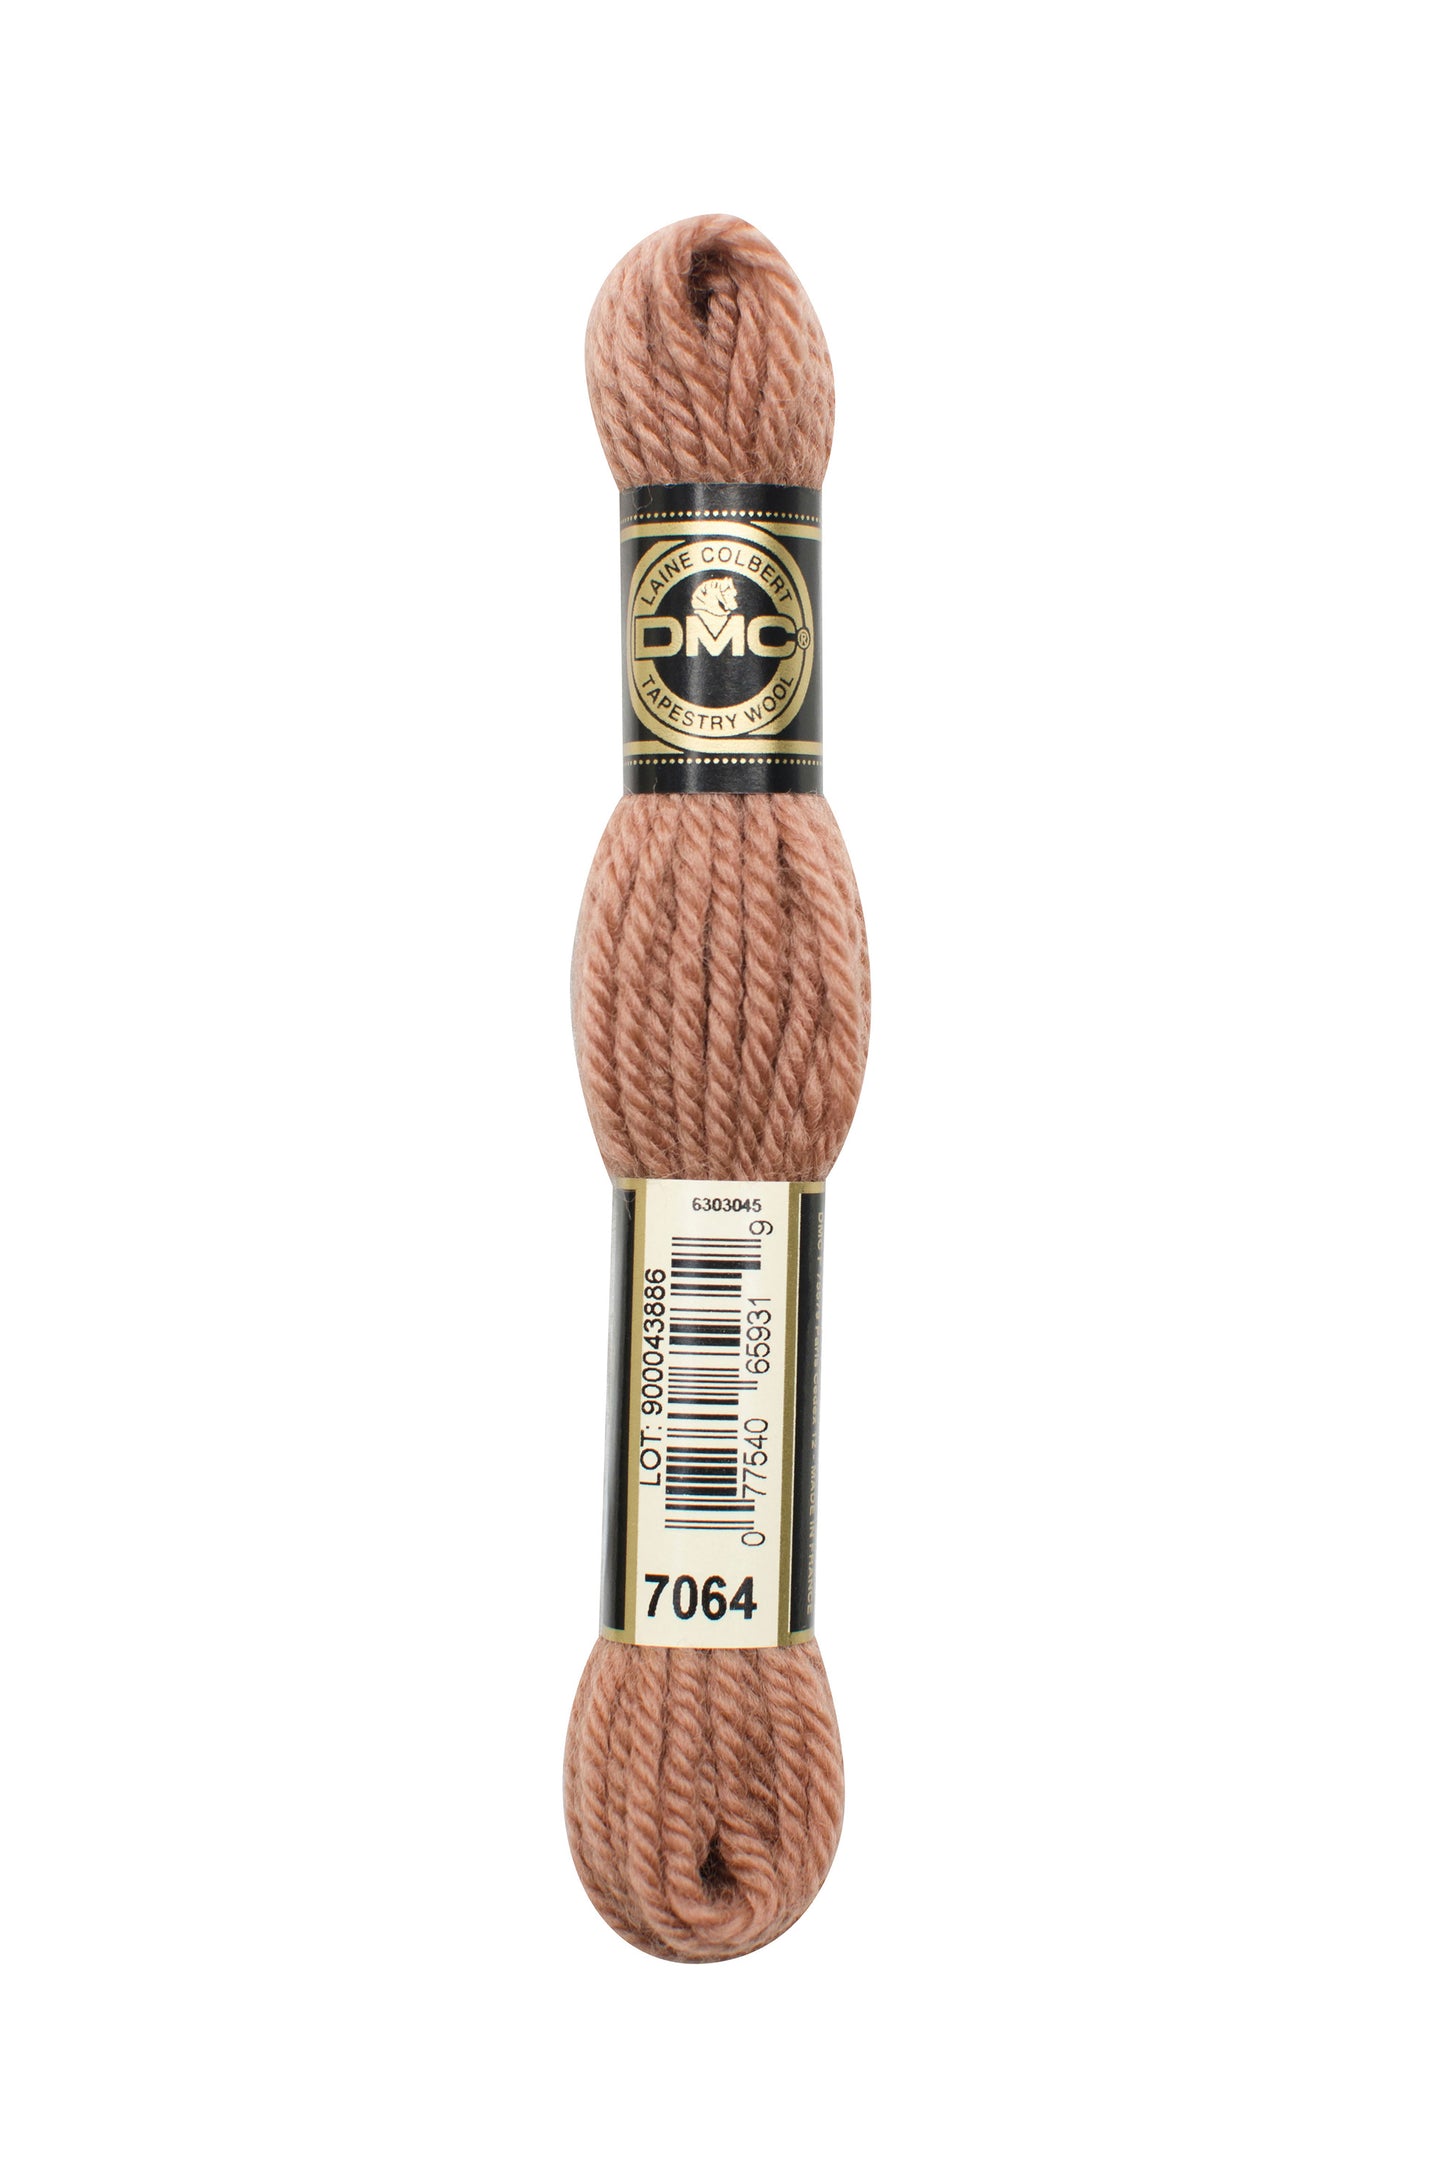 7064 – DMC Tapestry Wool